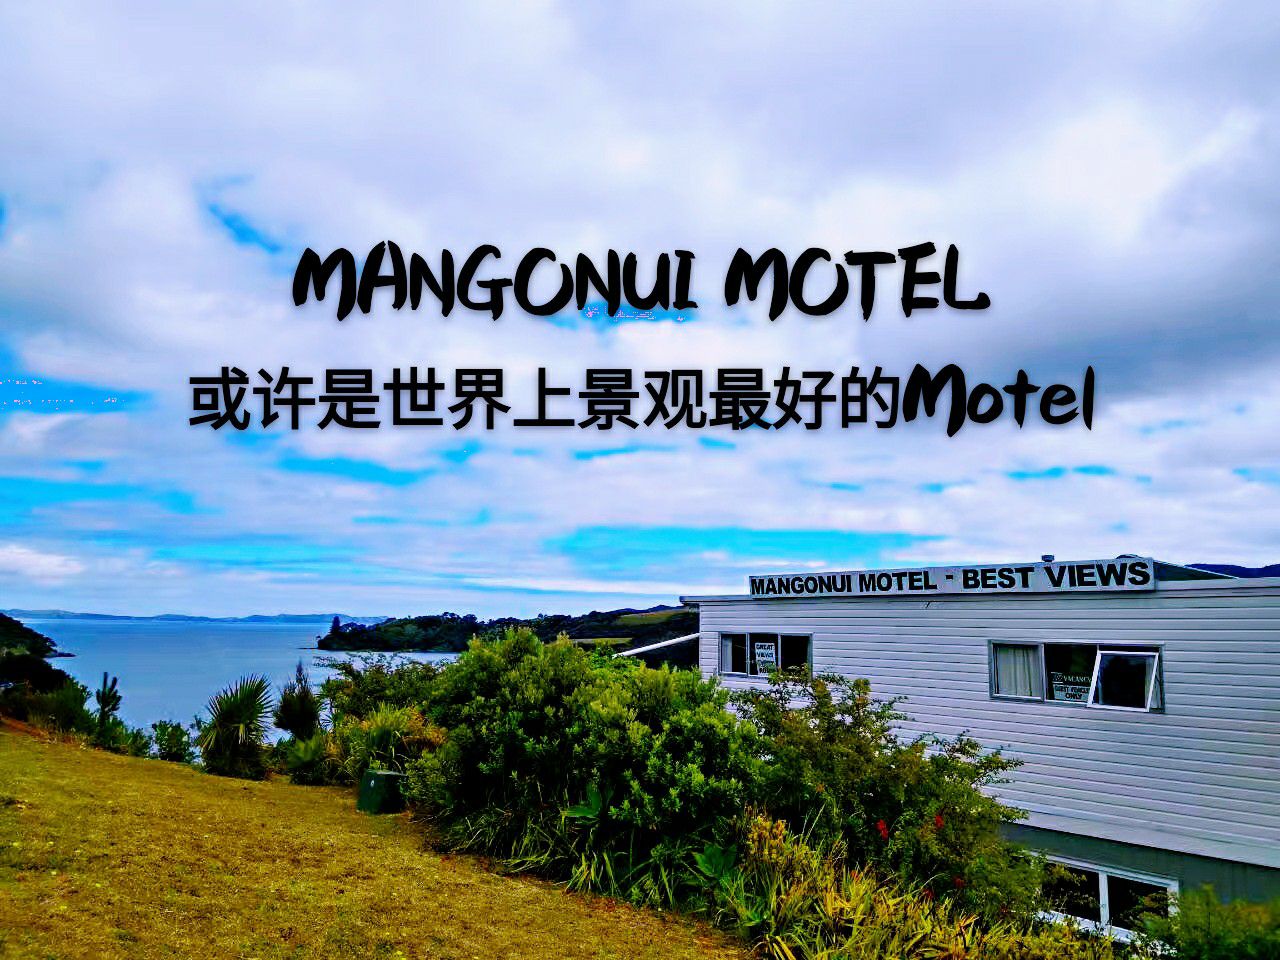 Mangoniu Motel，应该是我们在新西兰住过的所有Motel中，无论景色，还是性价比，都是最